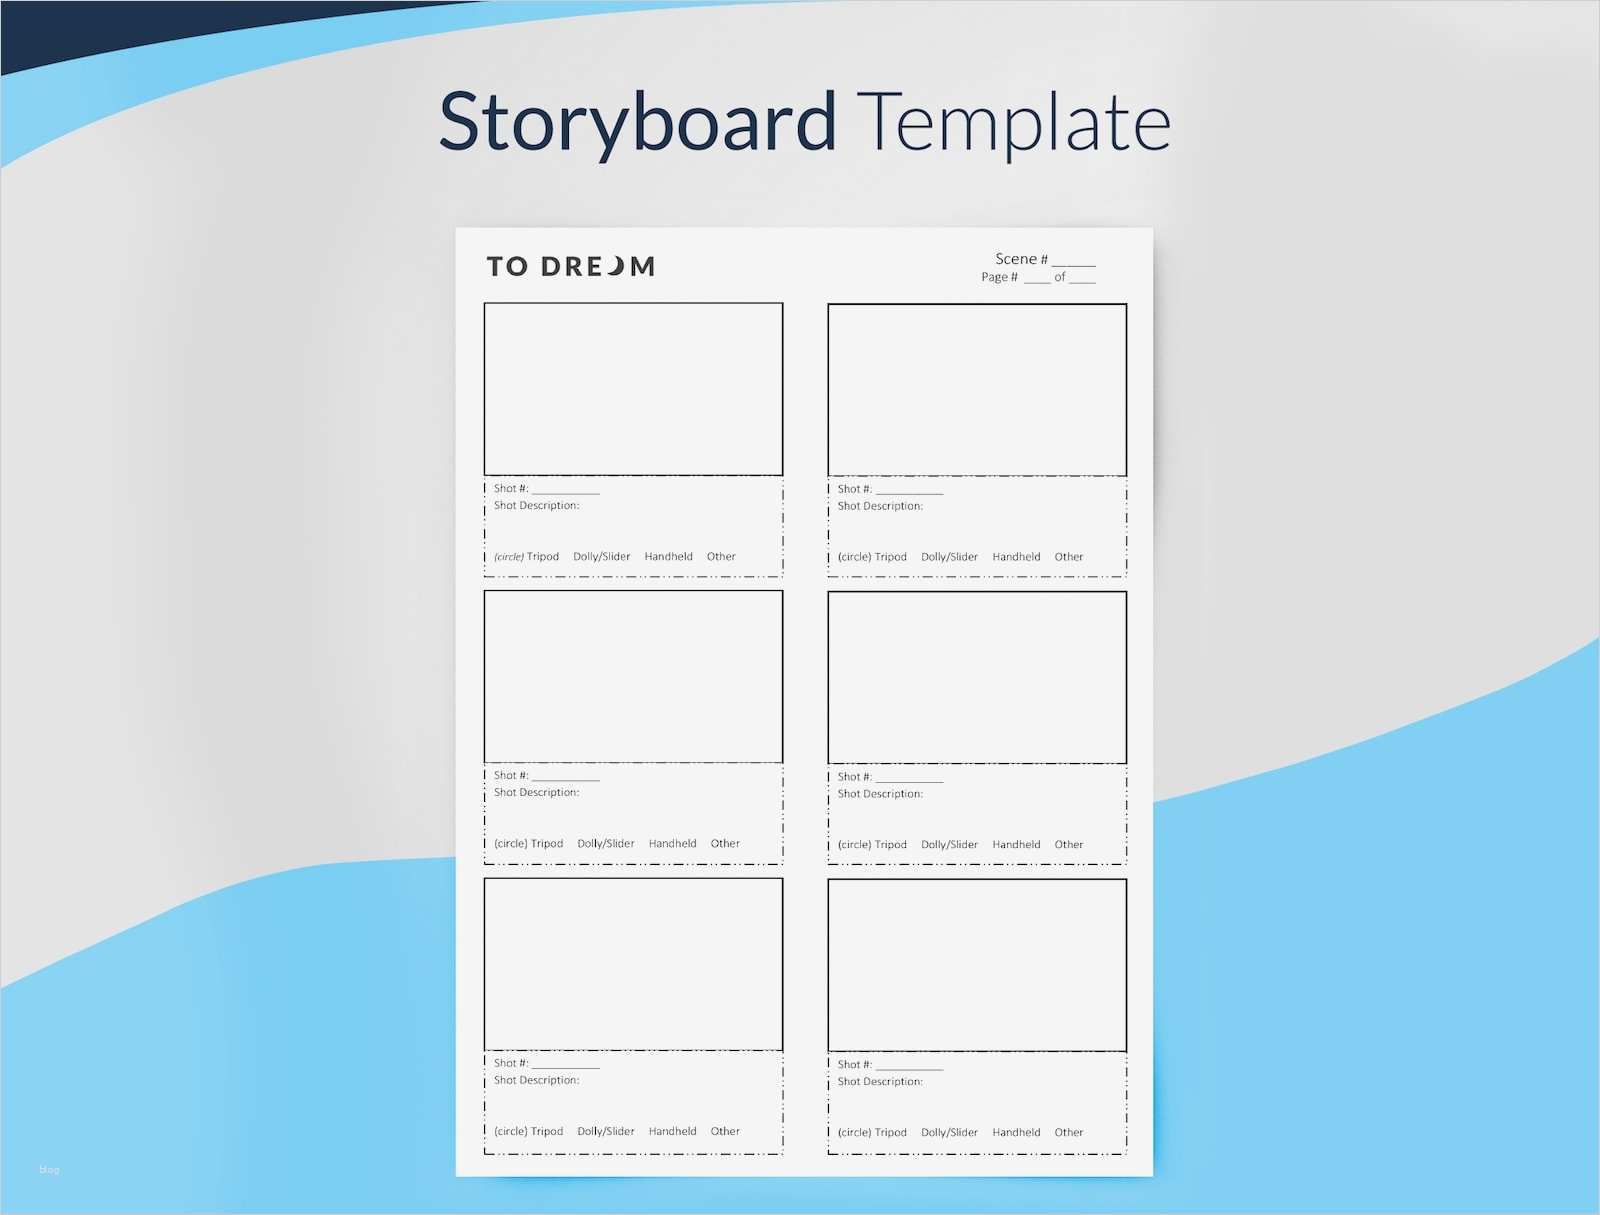 storyboard-vorlage-word-wunderbar-storyboard-template-for-makers-free-download-vorlage-ideen